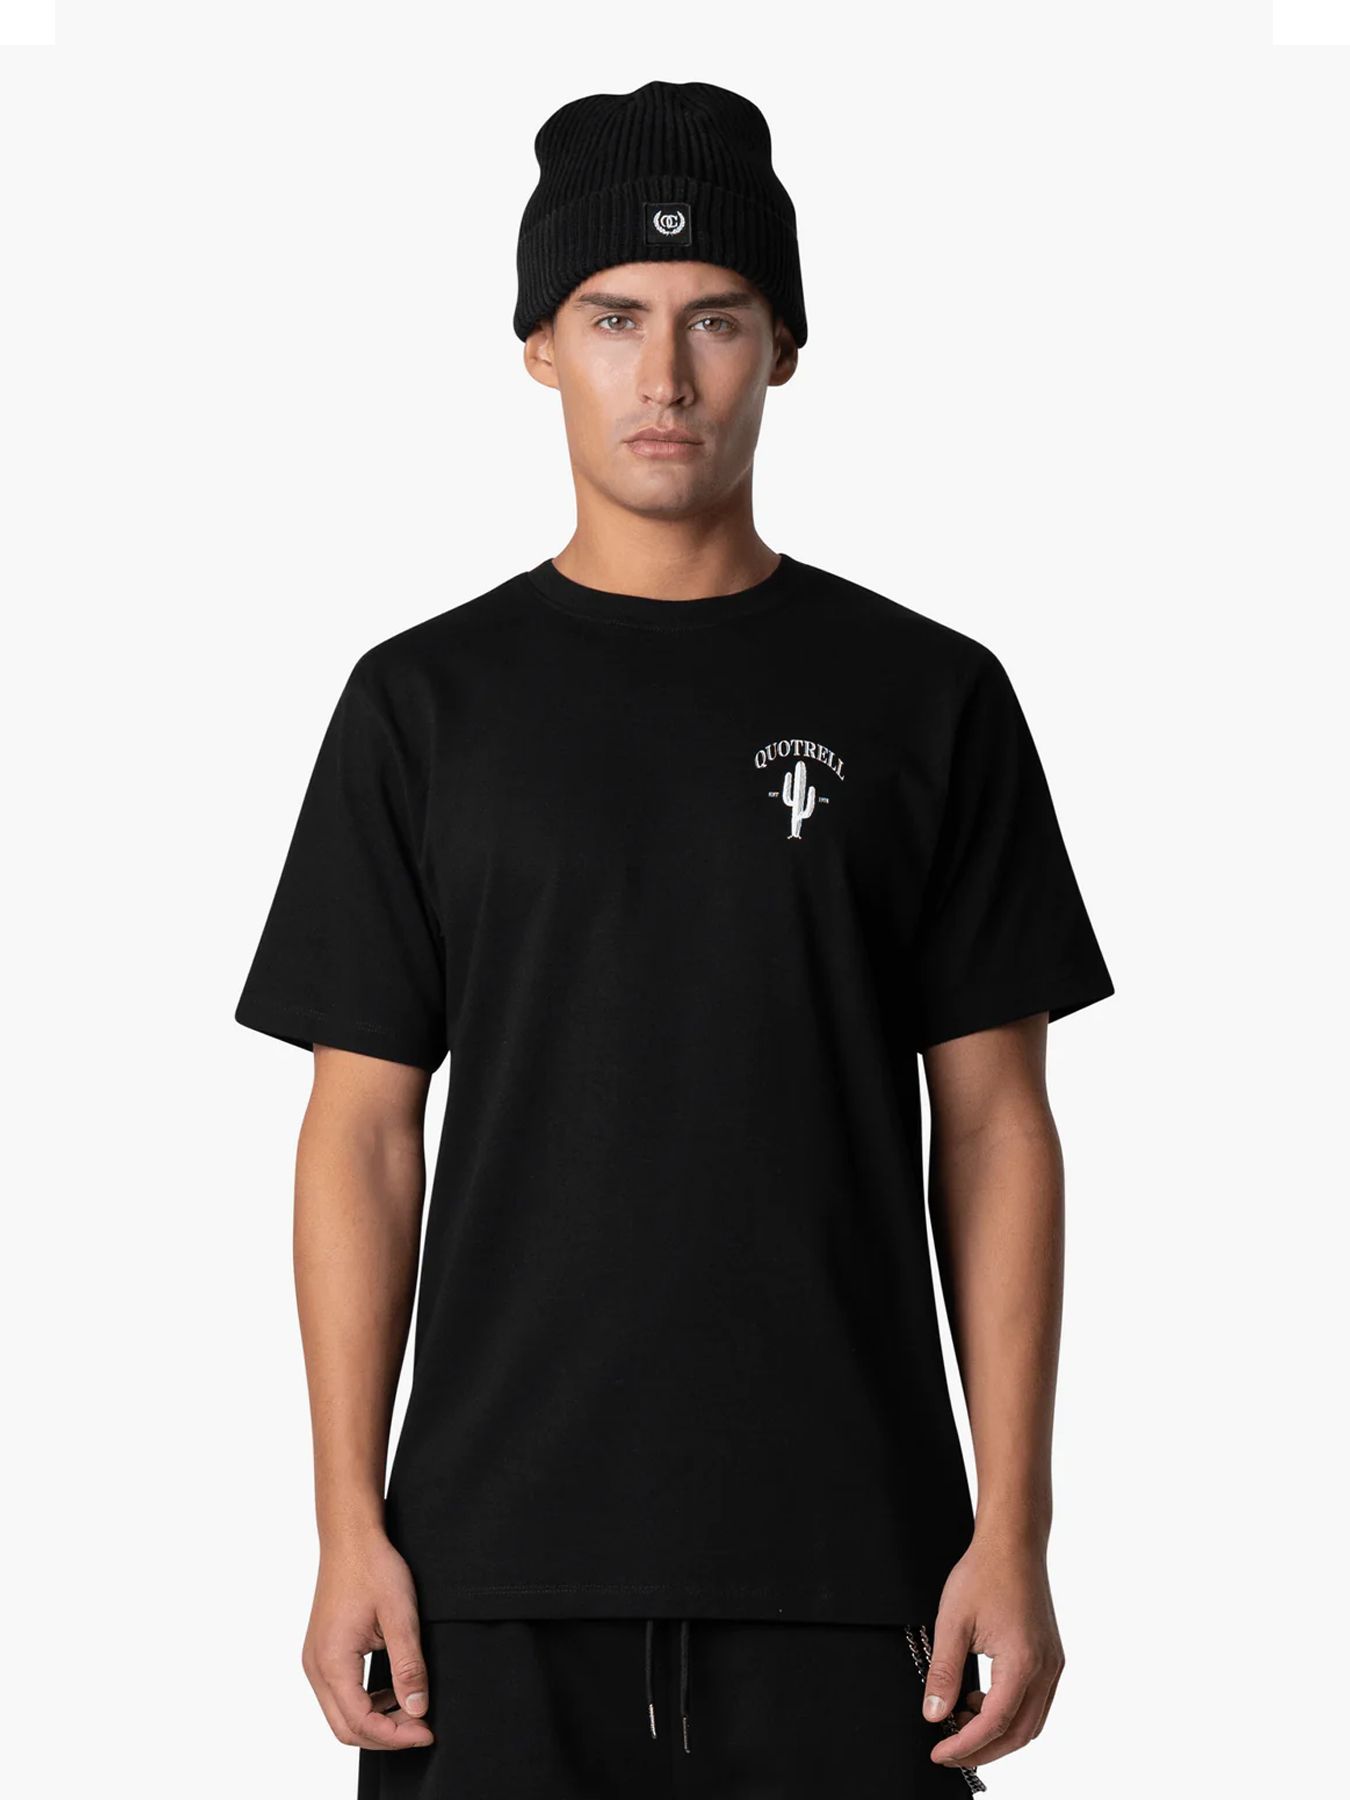 Quotrell Cactus T-shirt Black/White 00108487-904